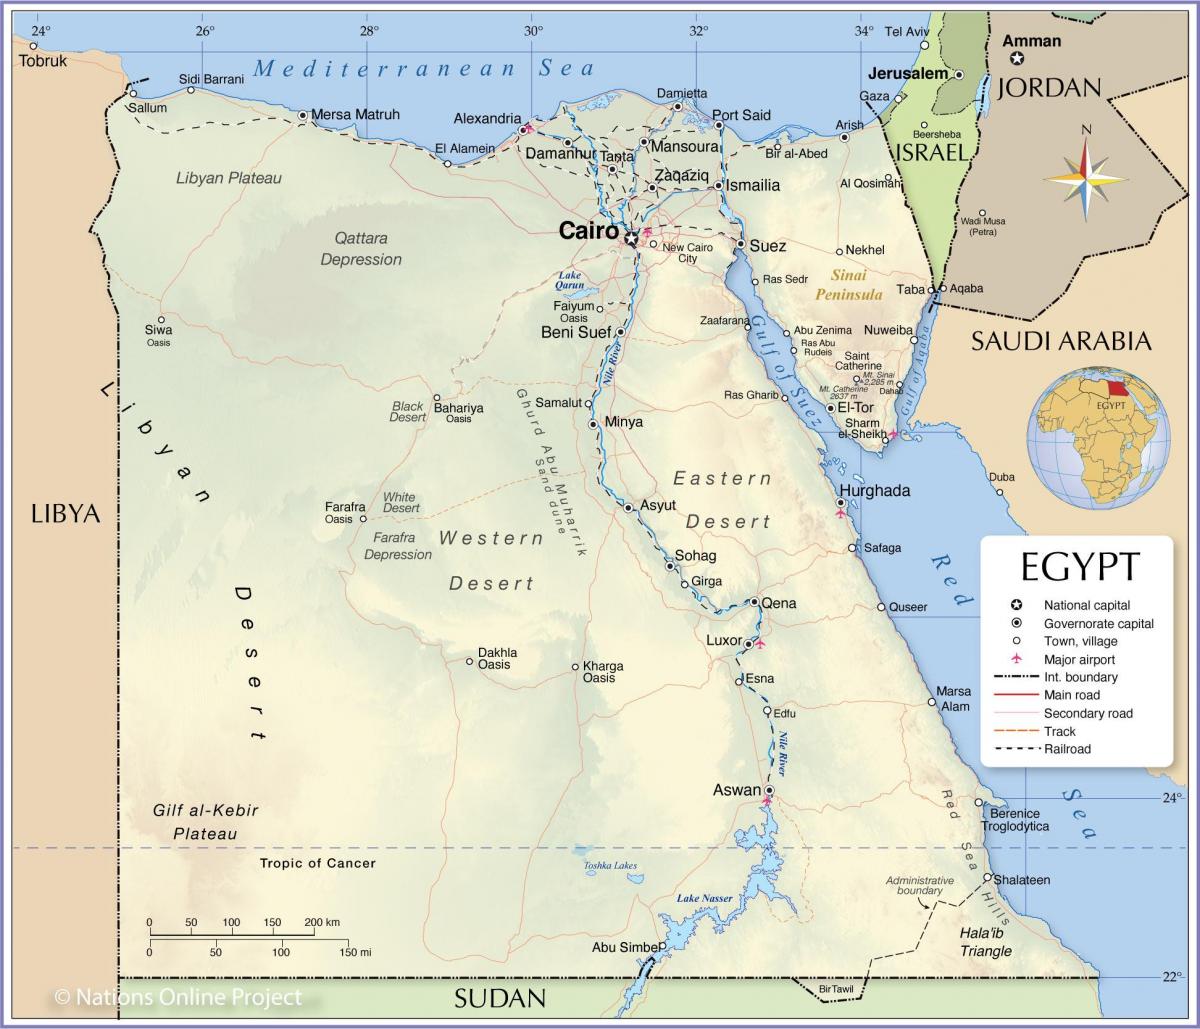 Cairo on Egypt map